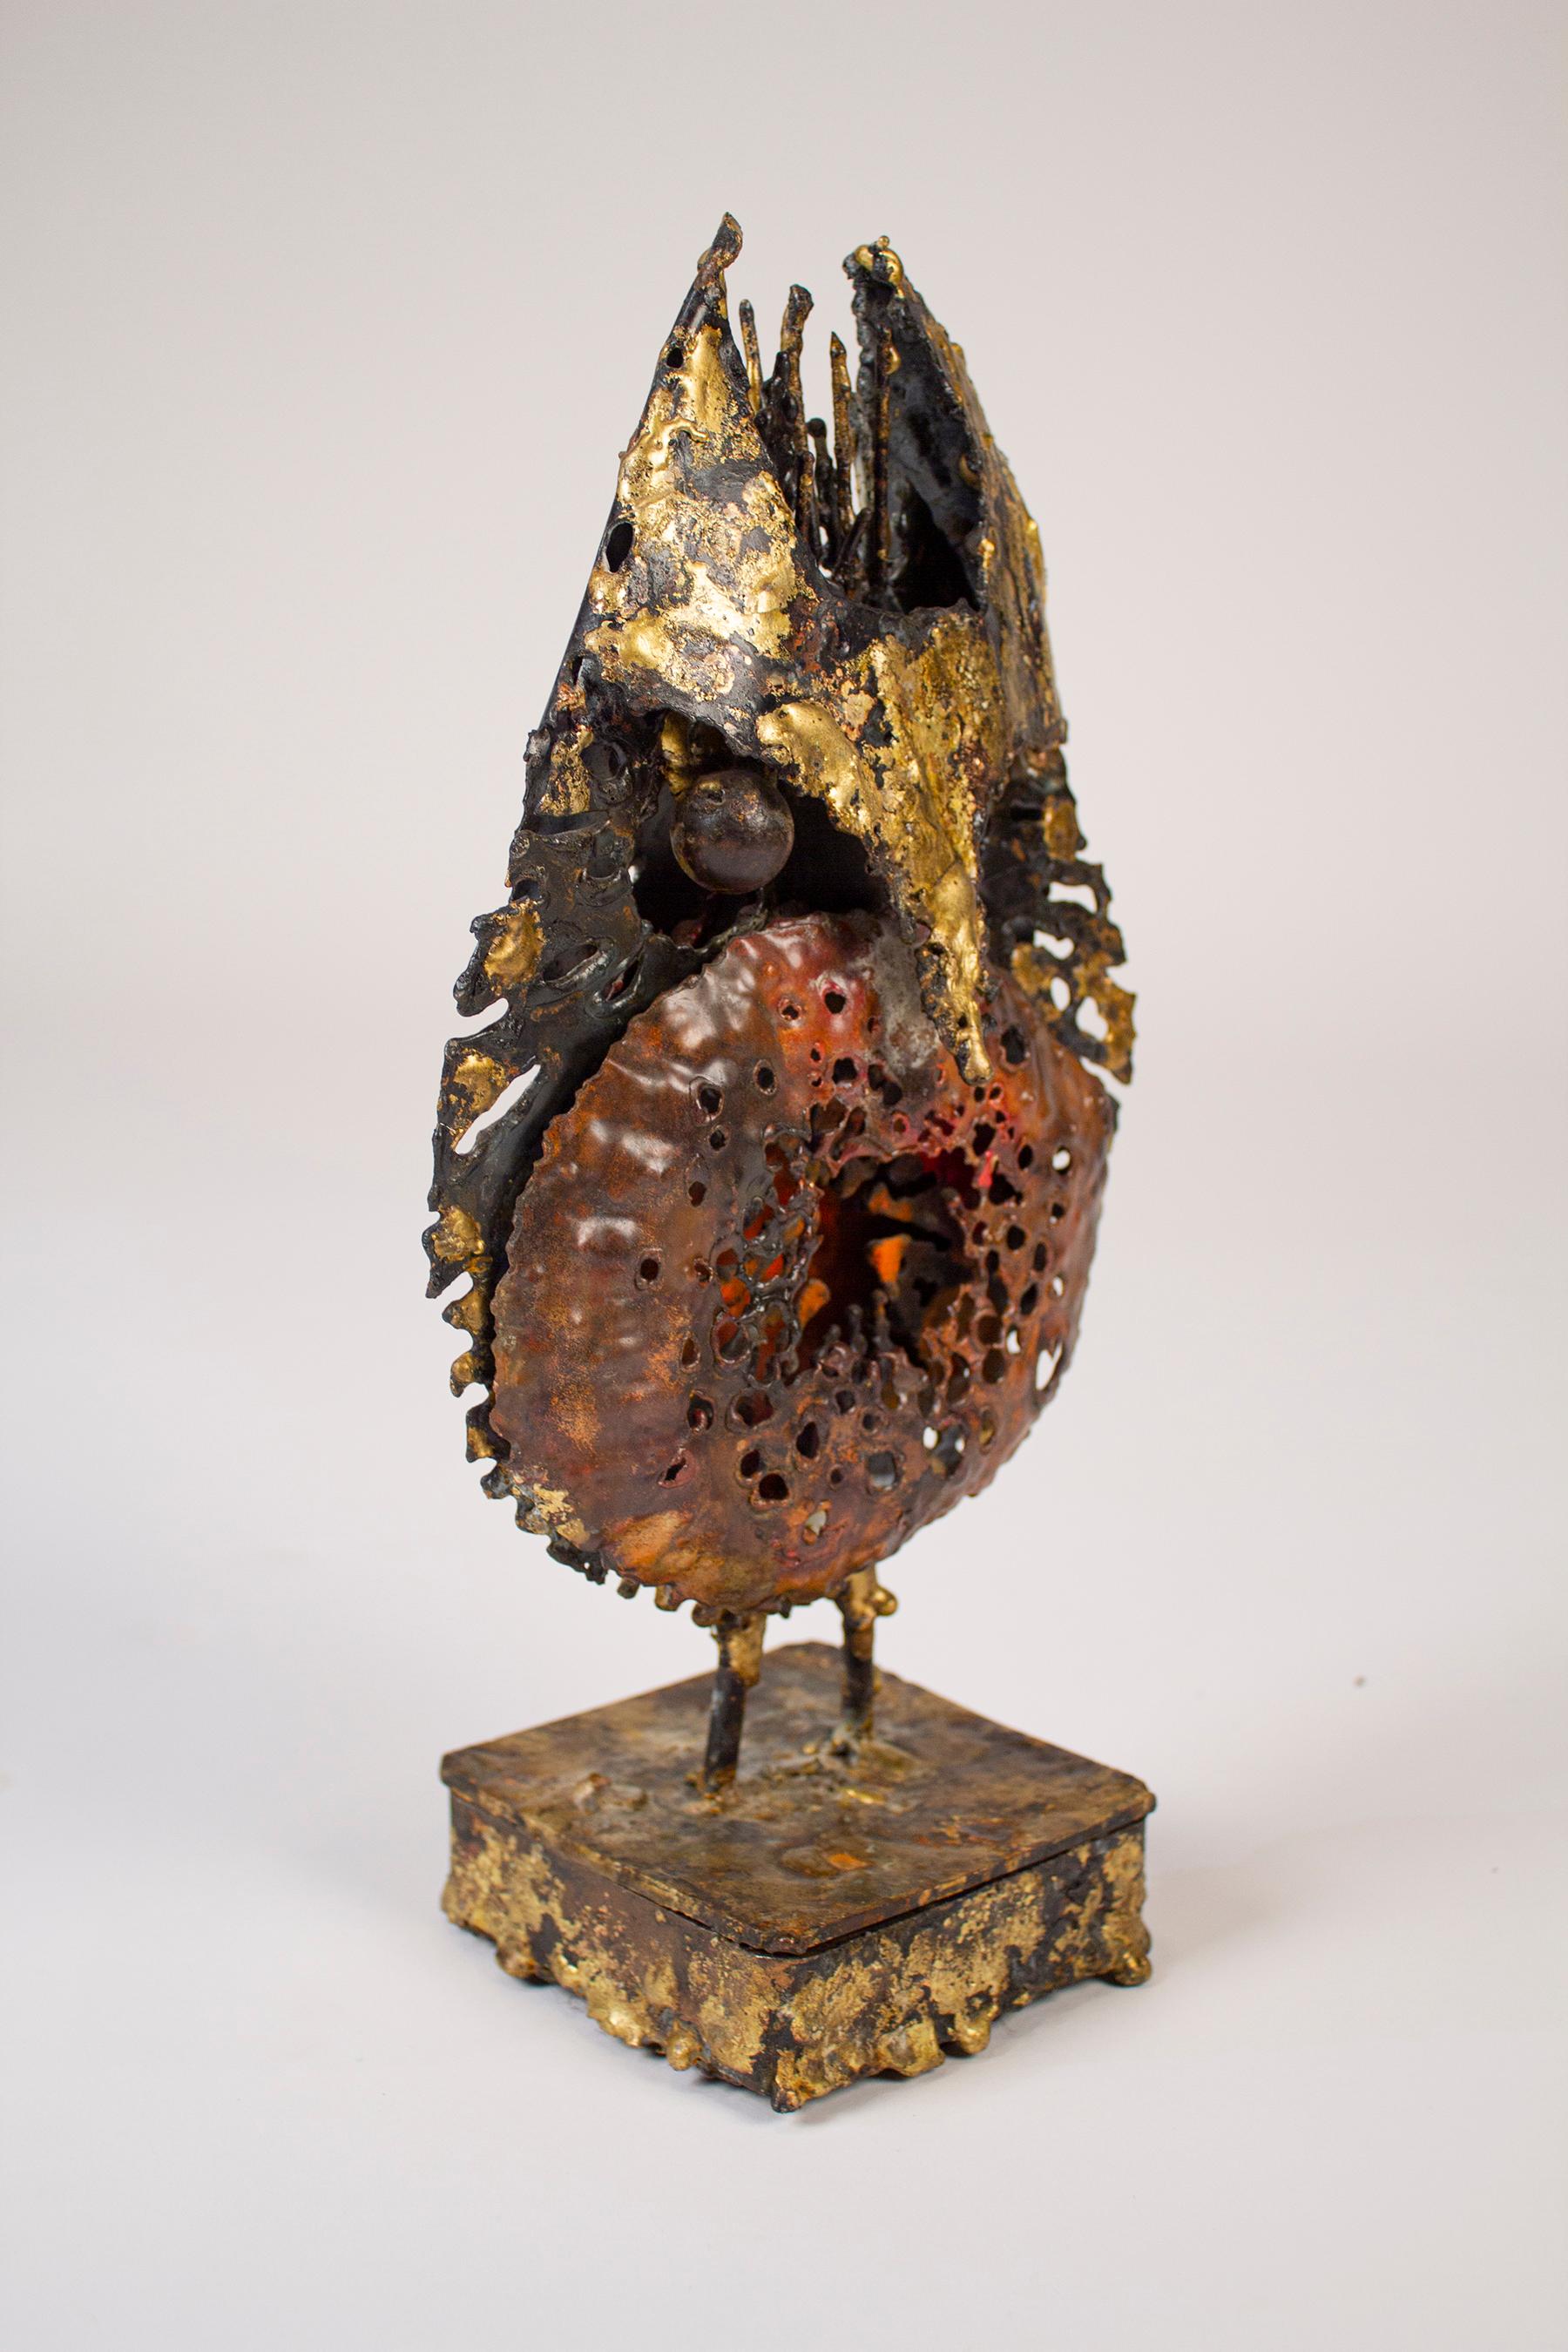 Welded James Bearden Brutalist Owl Sculpture with Stash Box in Base 